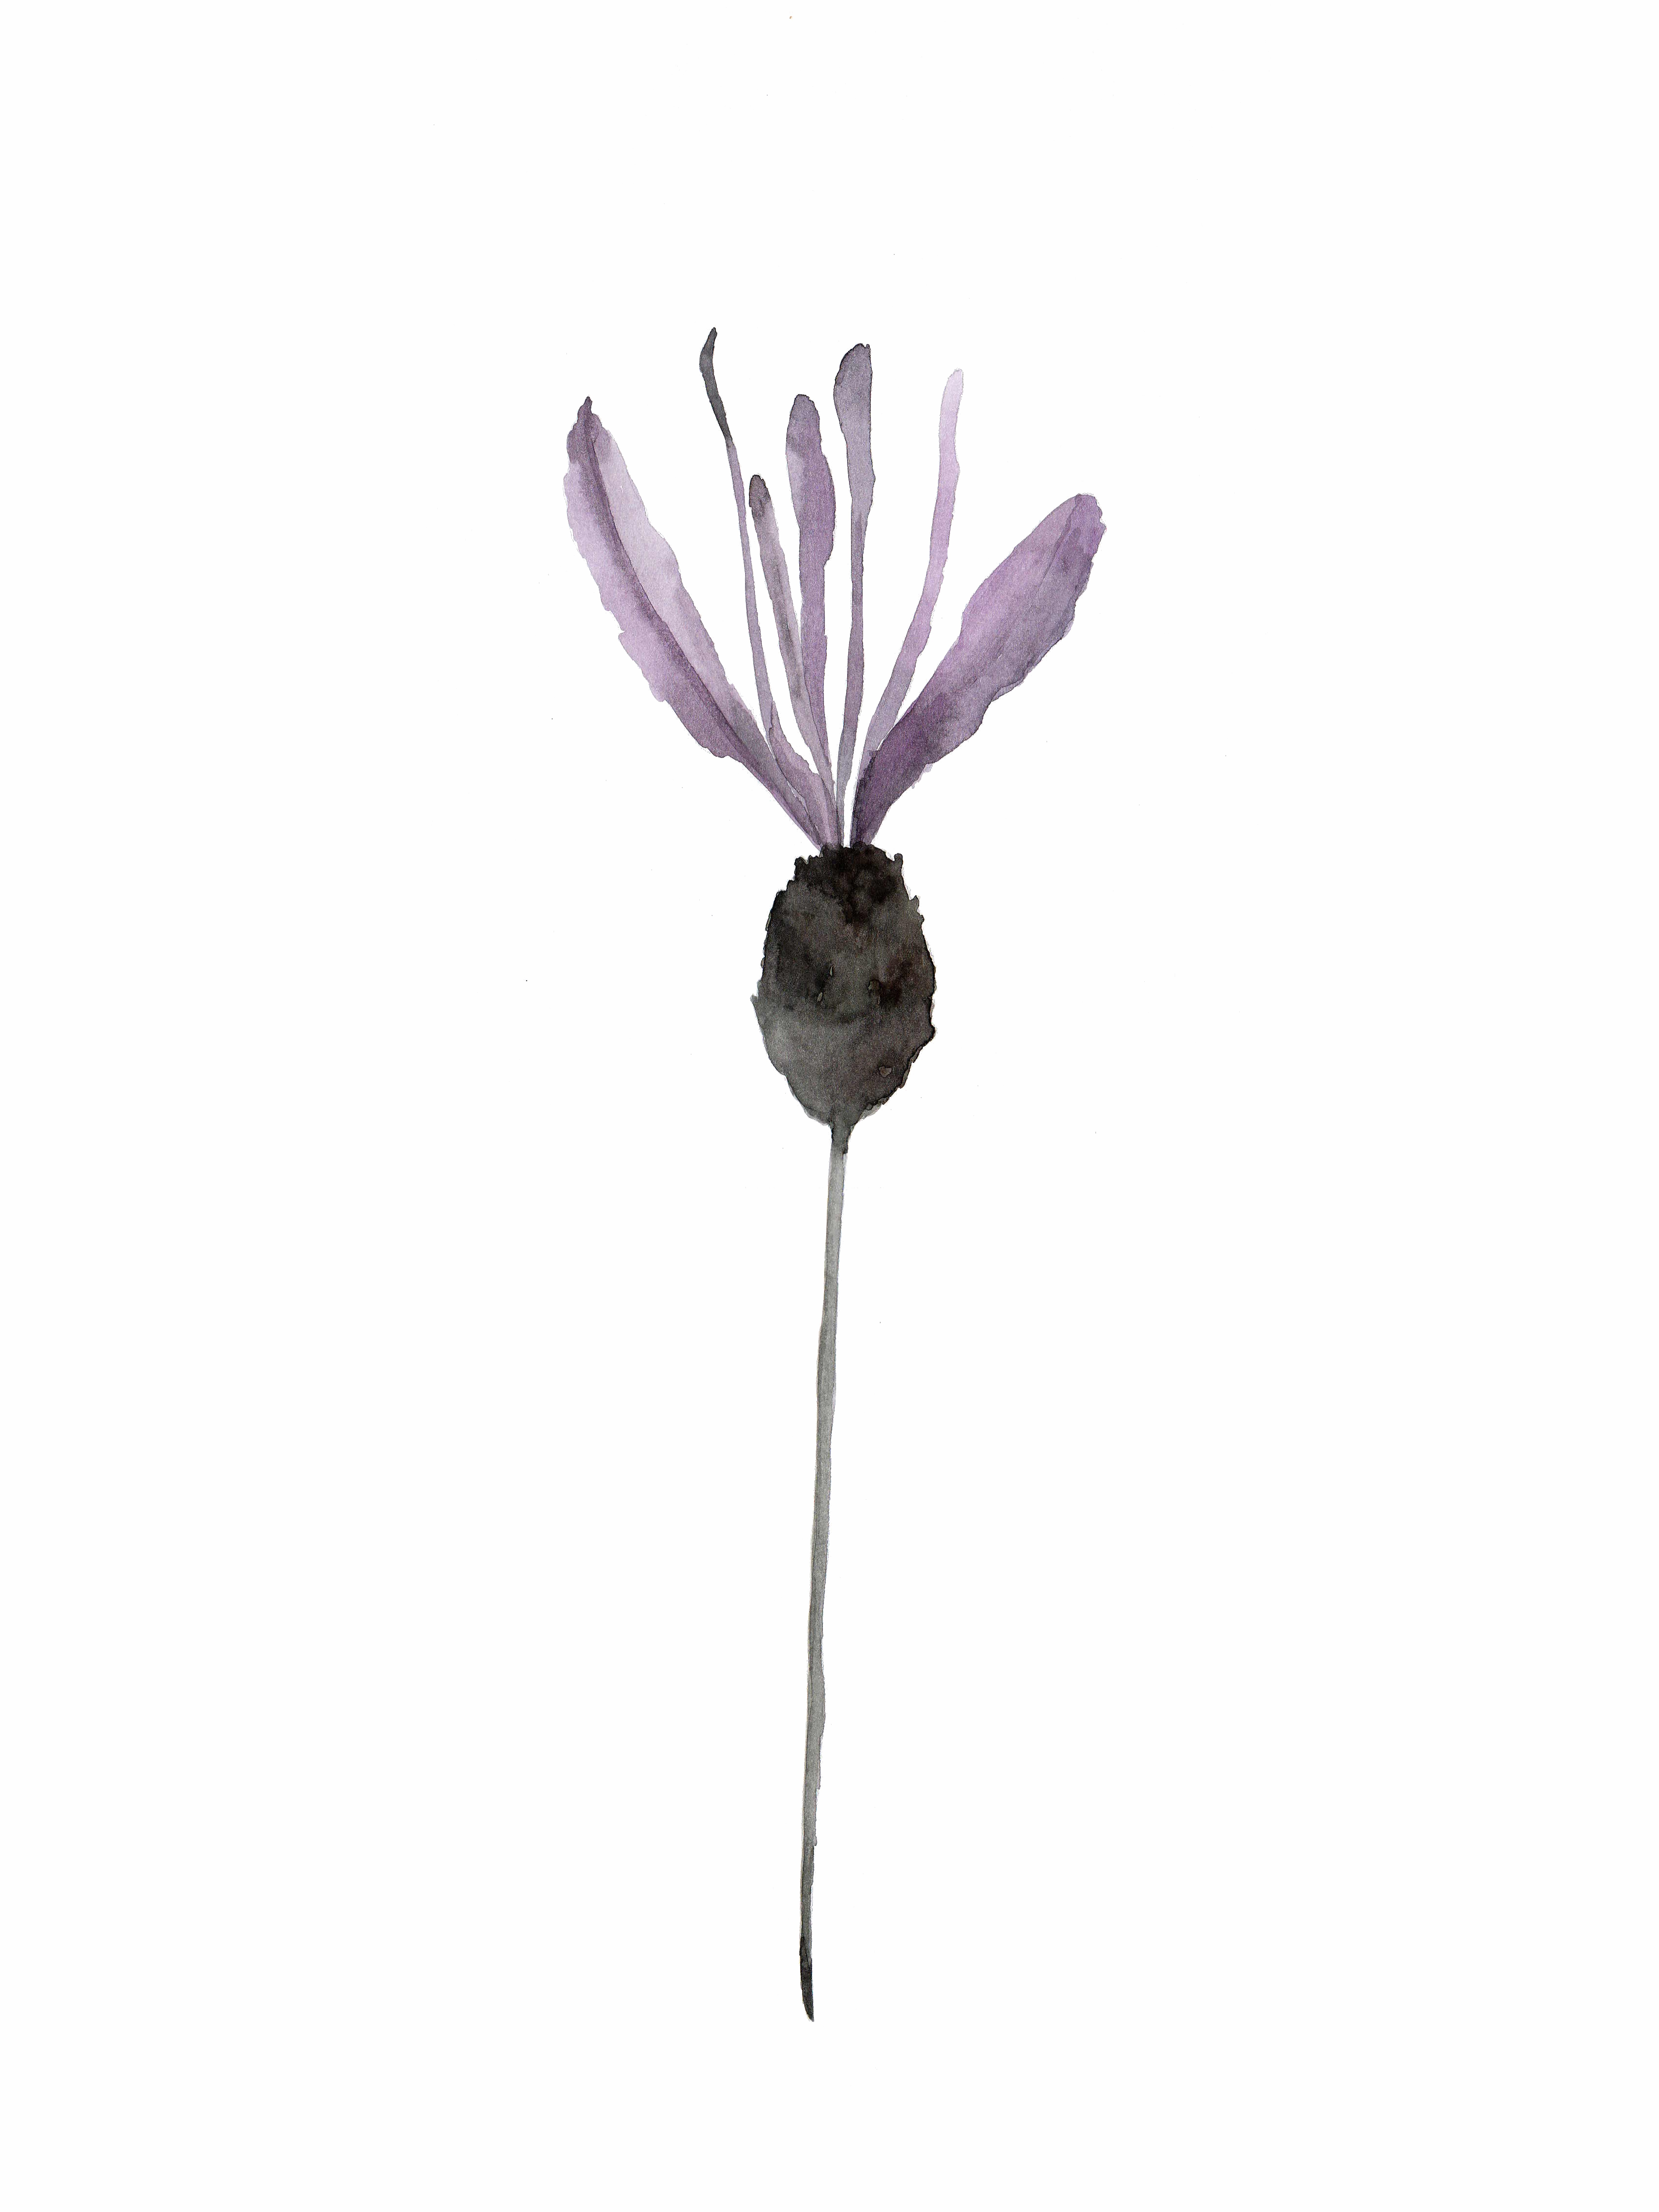 761-botanical-illustration---lavender1.jpg